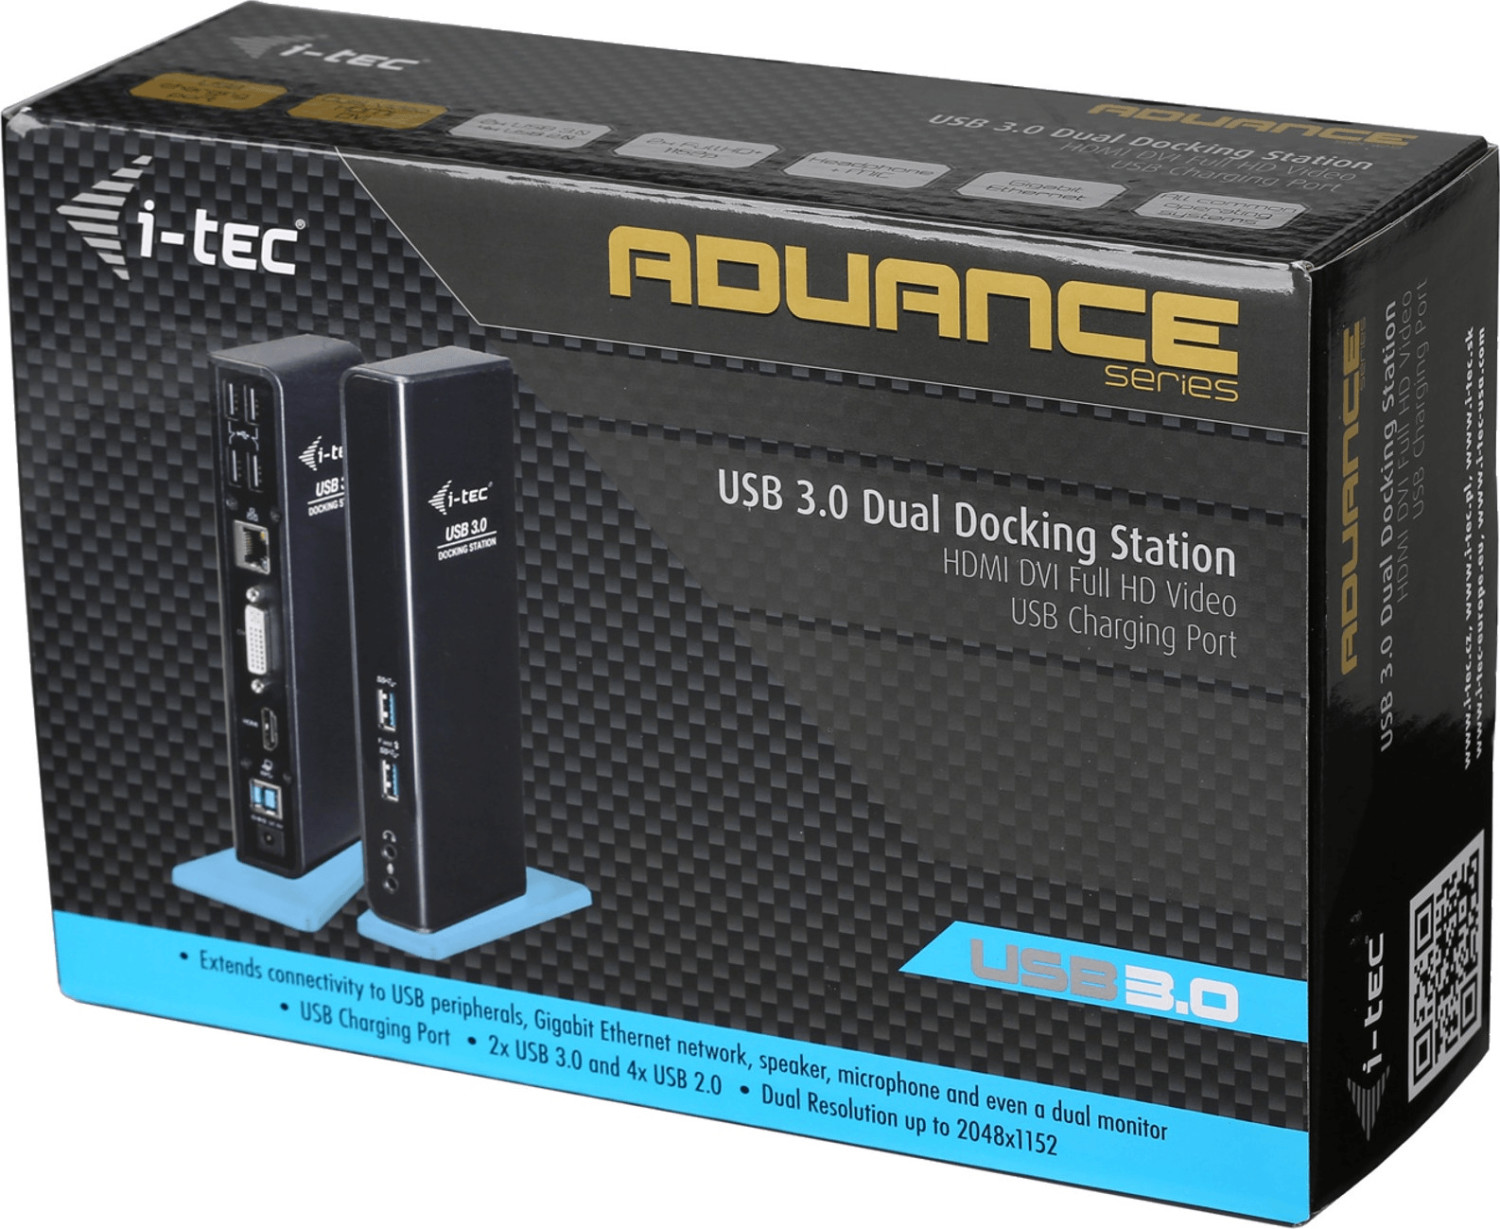 U3HDMIDVIDOCK, i-tec USB 3.0 Dual Docking Station HDMI DVI